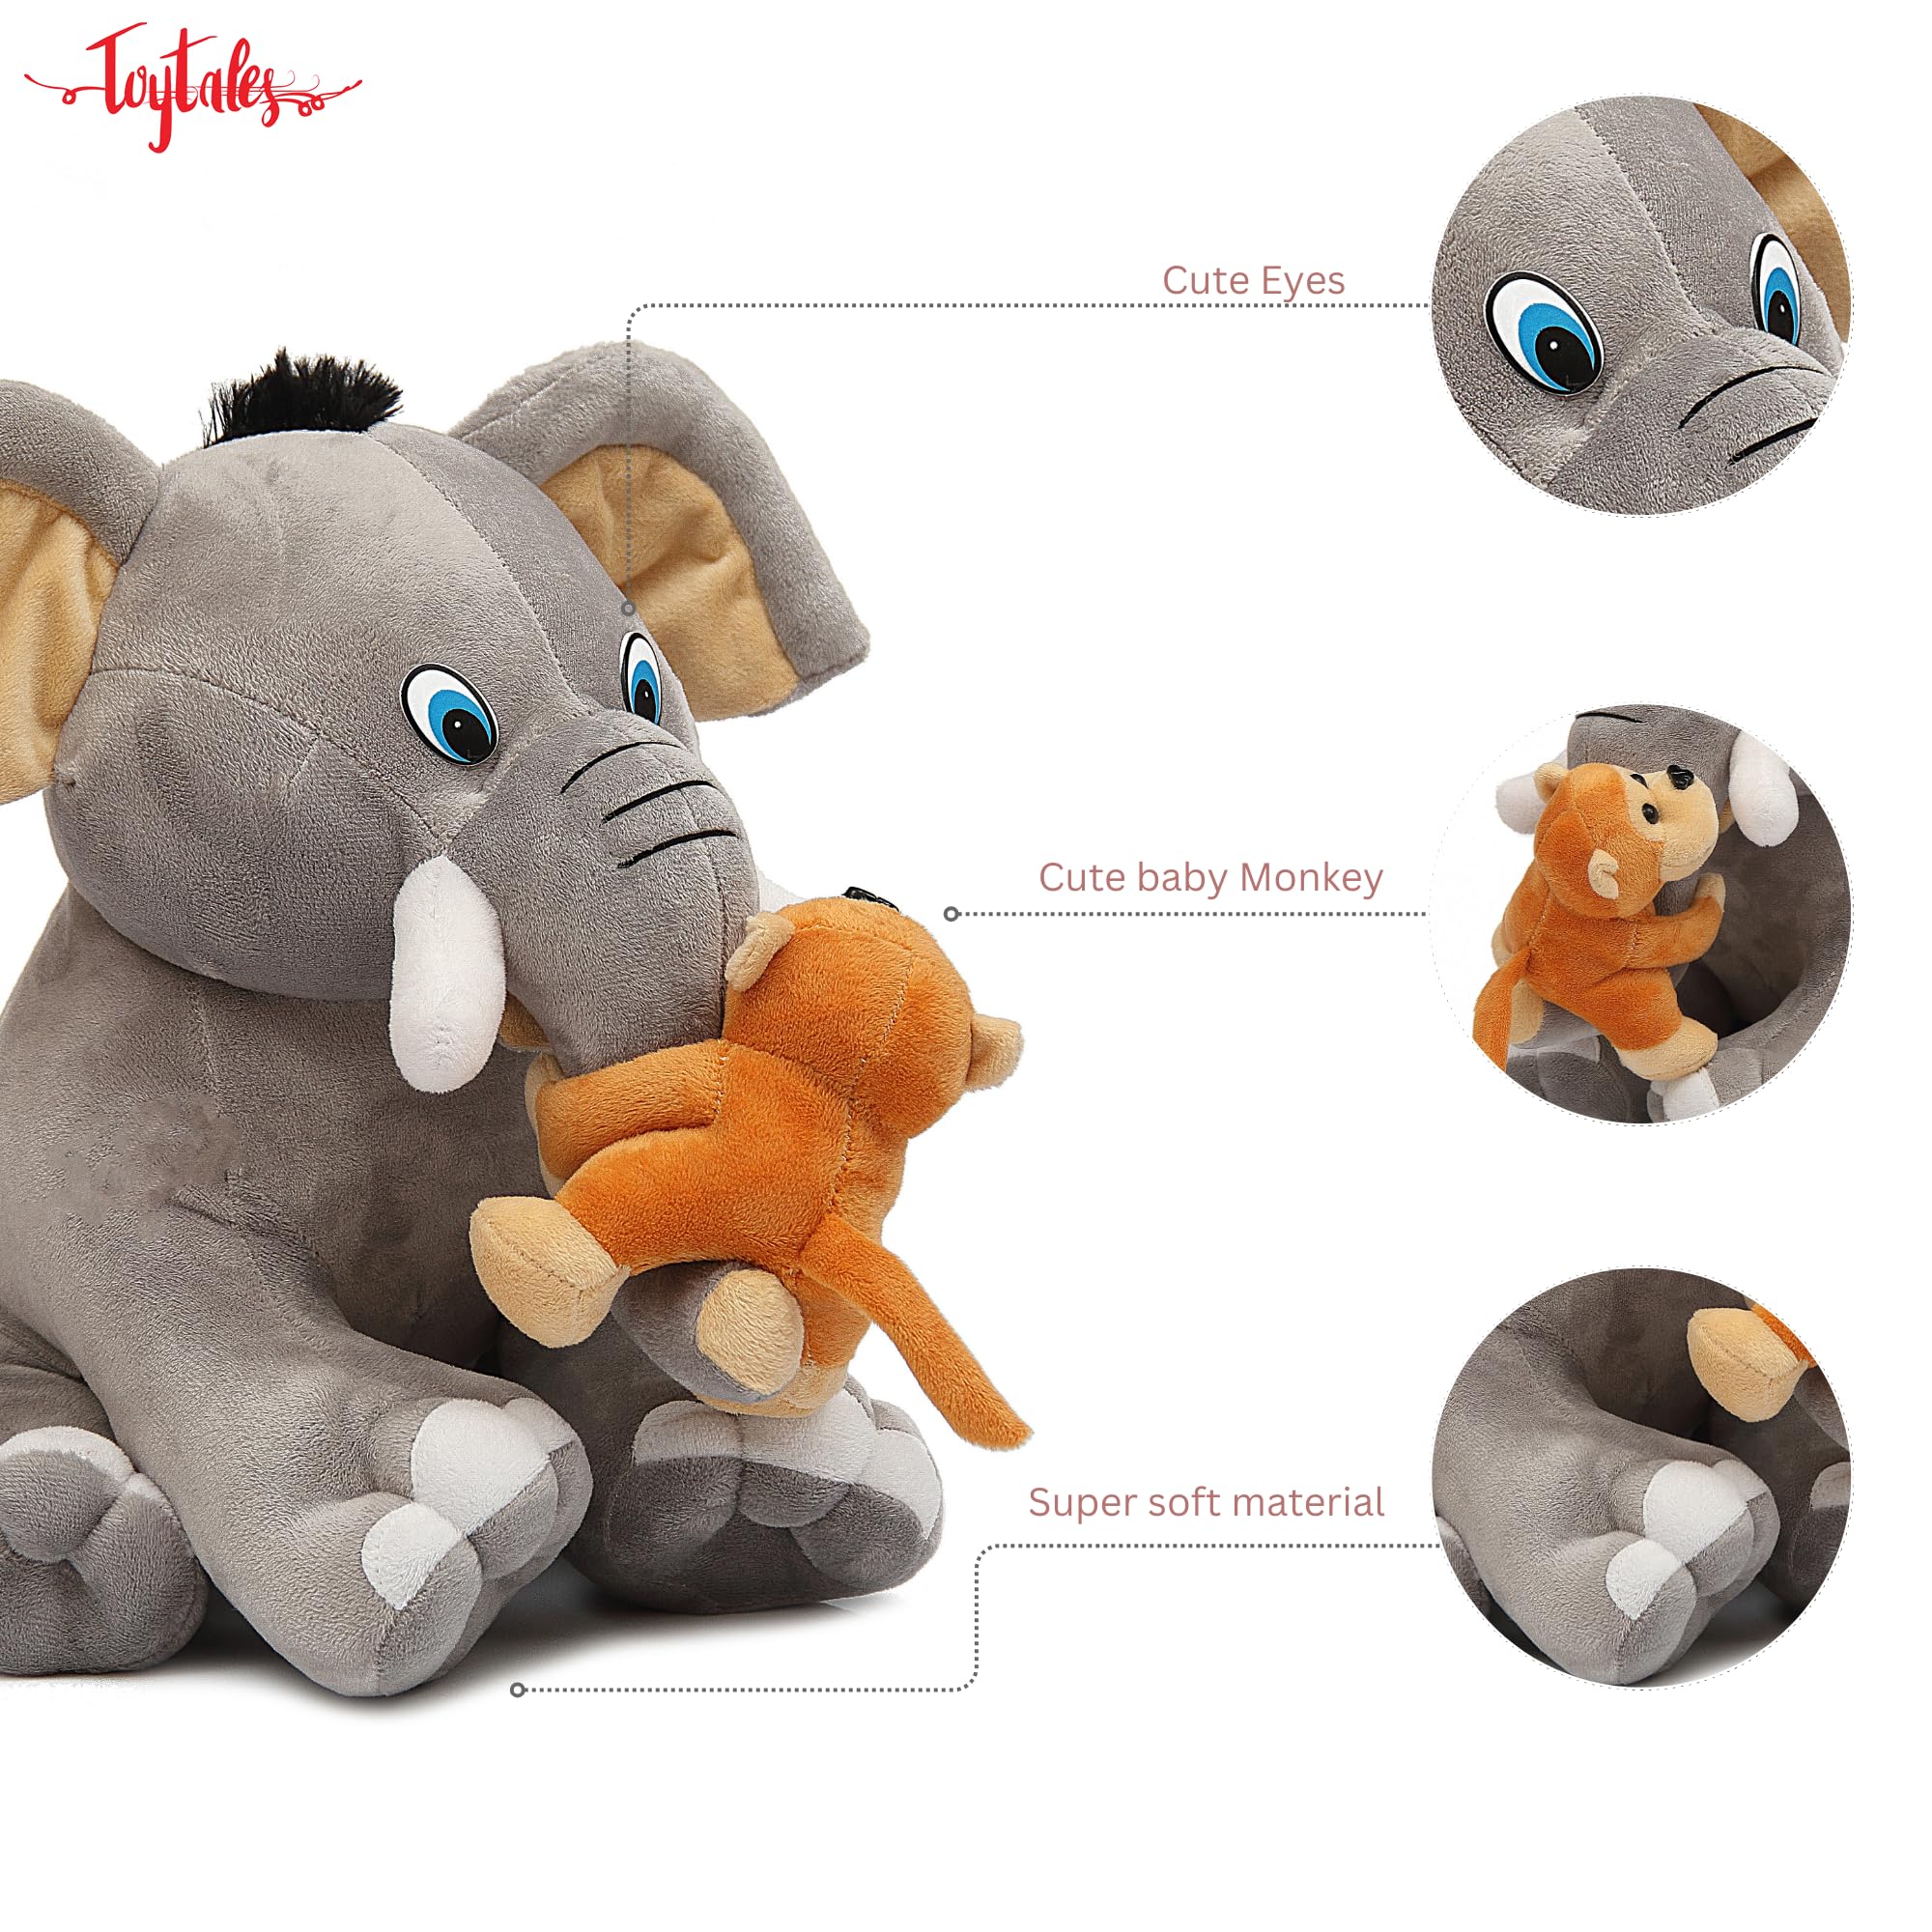 Stuffed Elephant with Monkey Plush Toy, Cute Huggable Shape Animal Stuffed Toy, Soft & Cuddly, for Kids, Boys & Girls, Best Birthday Gift Idea - 30cm (Grey/Brown)